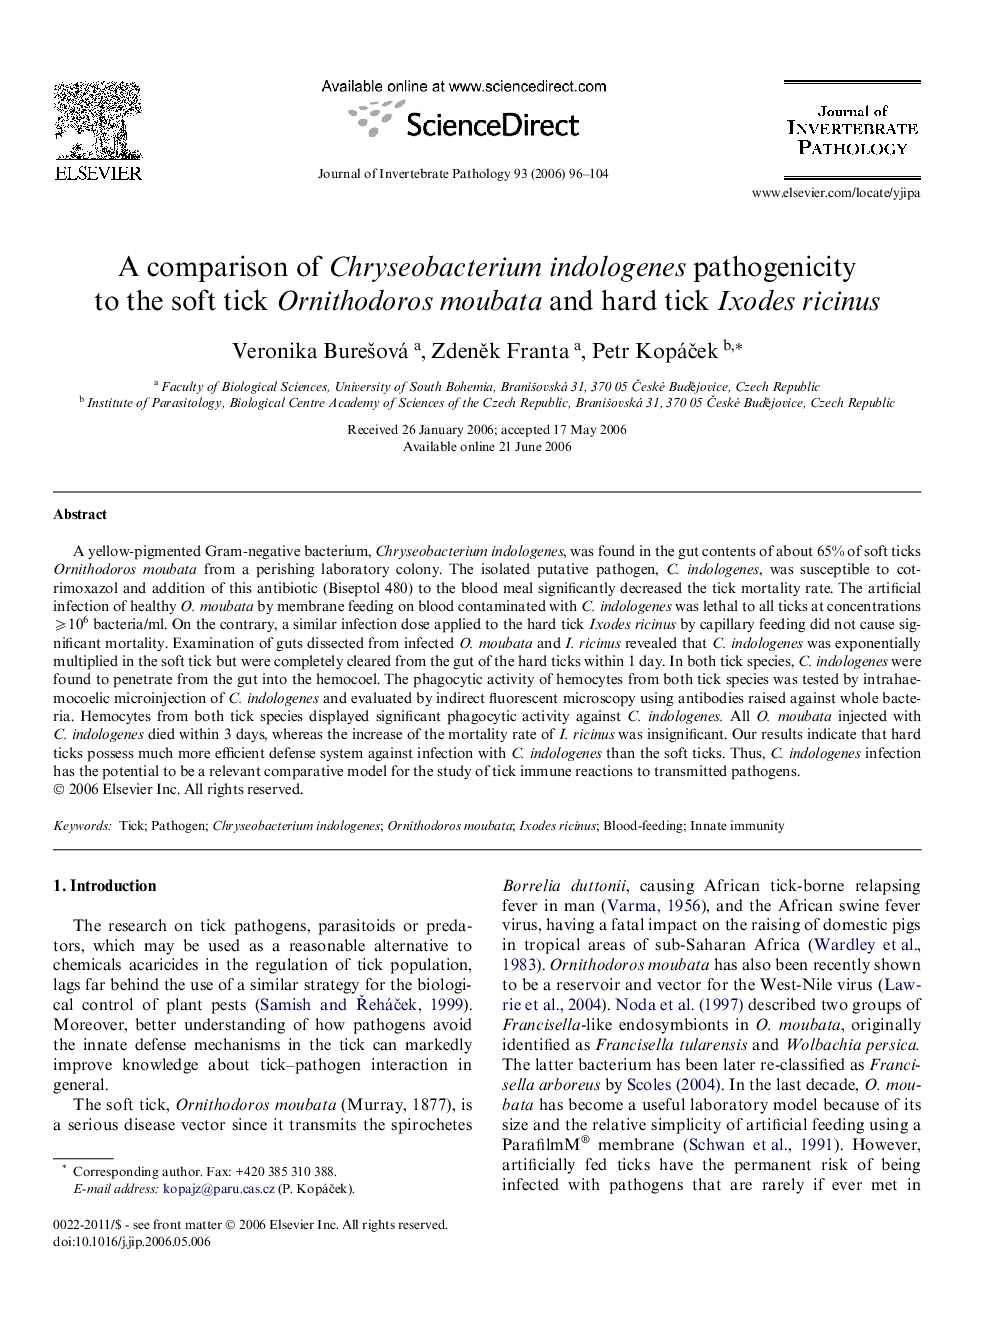 A comparison of Chryseobacterium indologenes pathogenicity to the soft tick Ornithodoros moubata and hard tick Ixodes ricinus